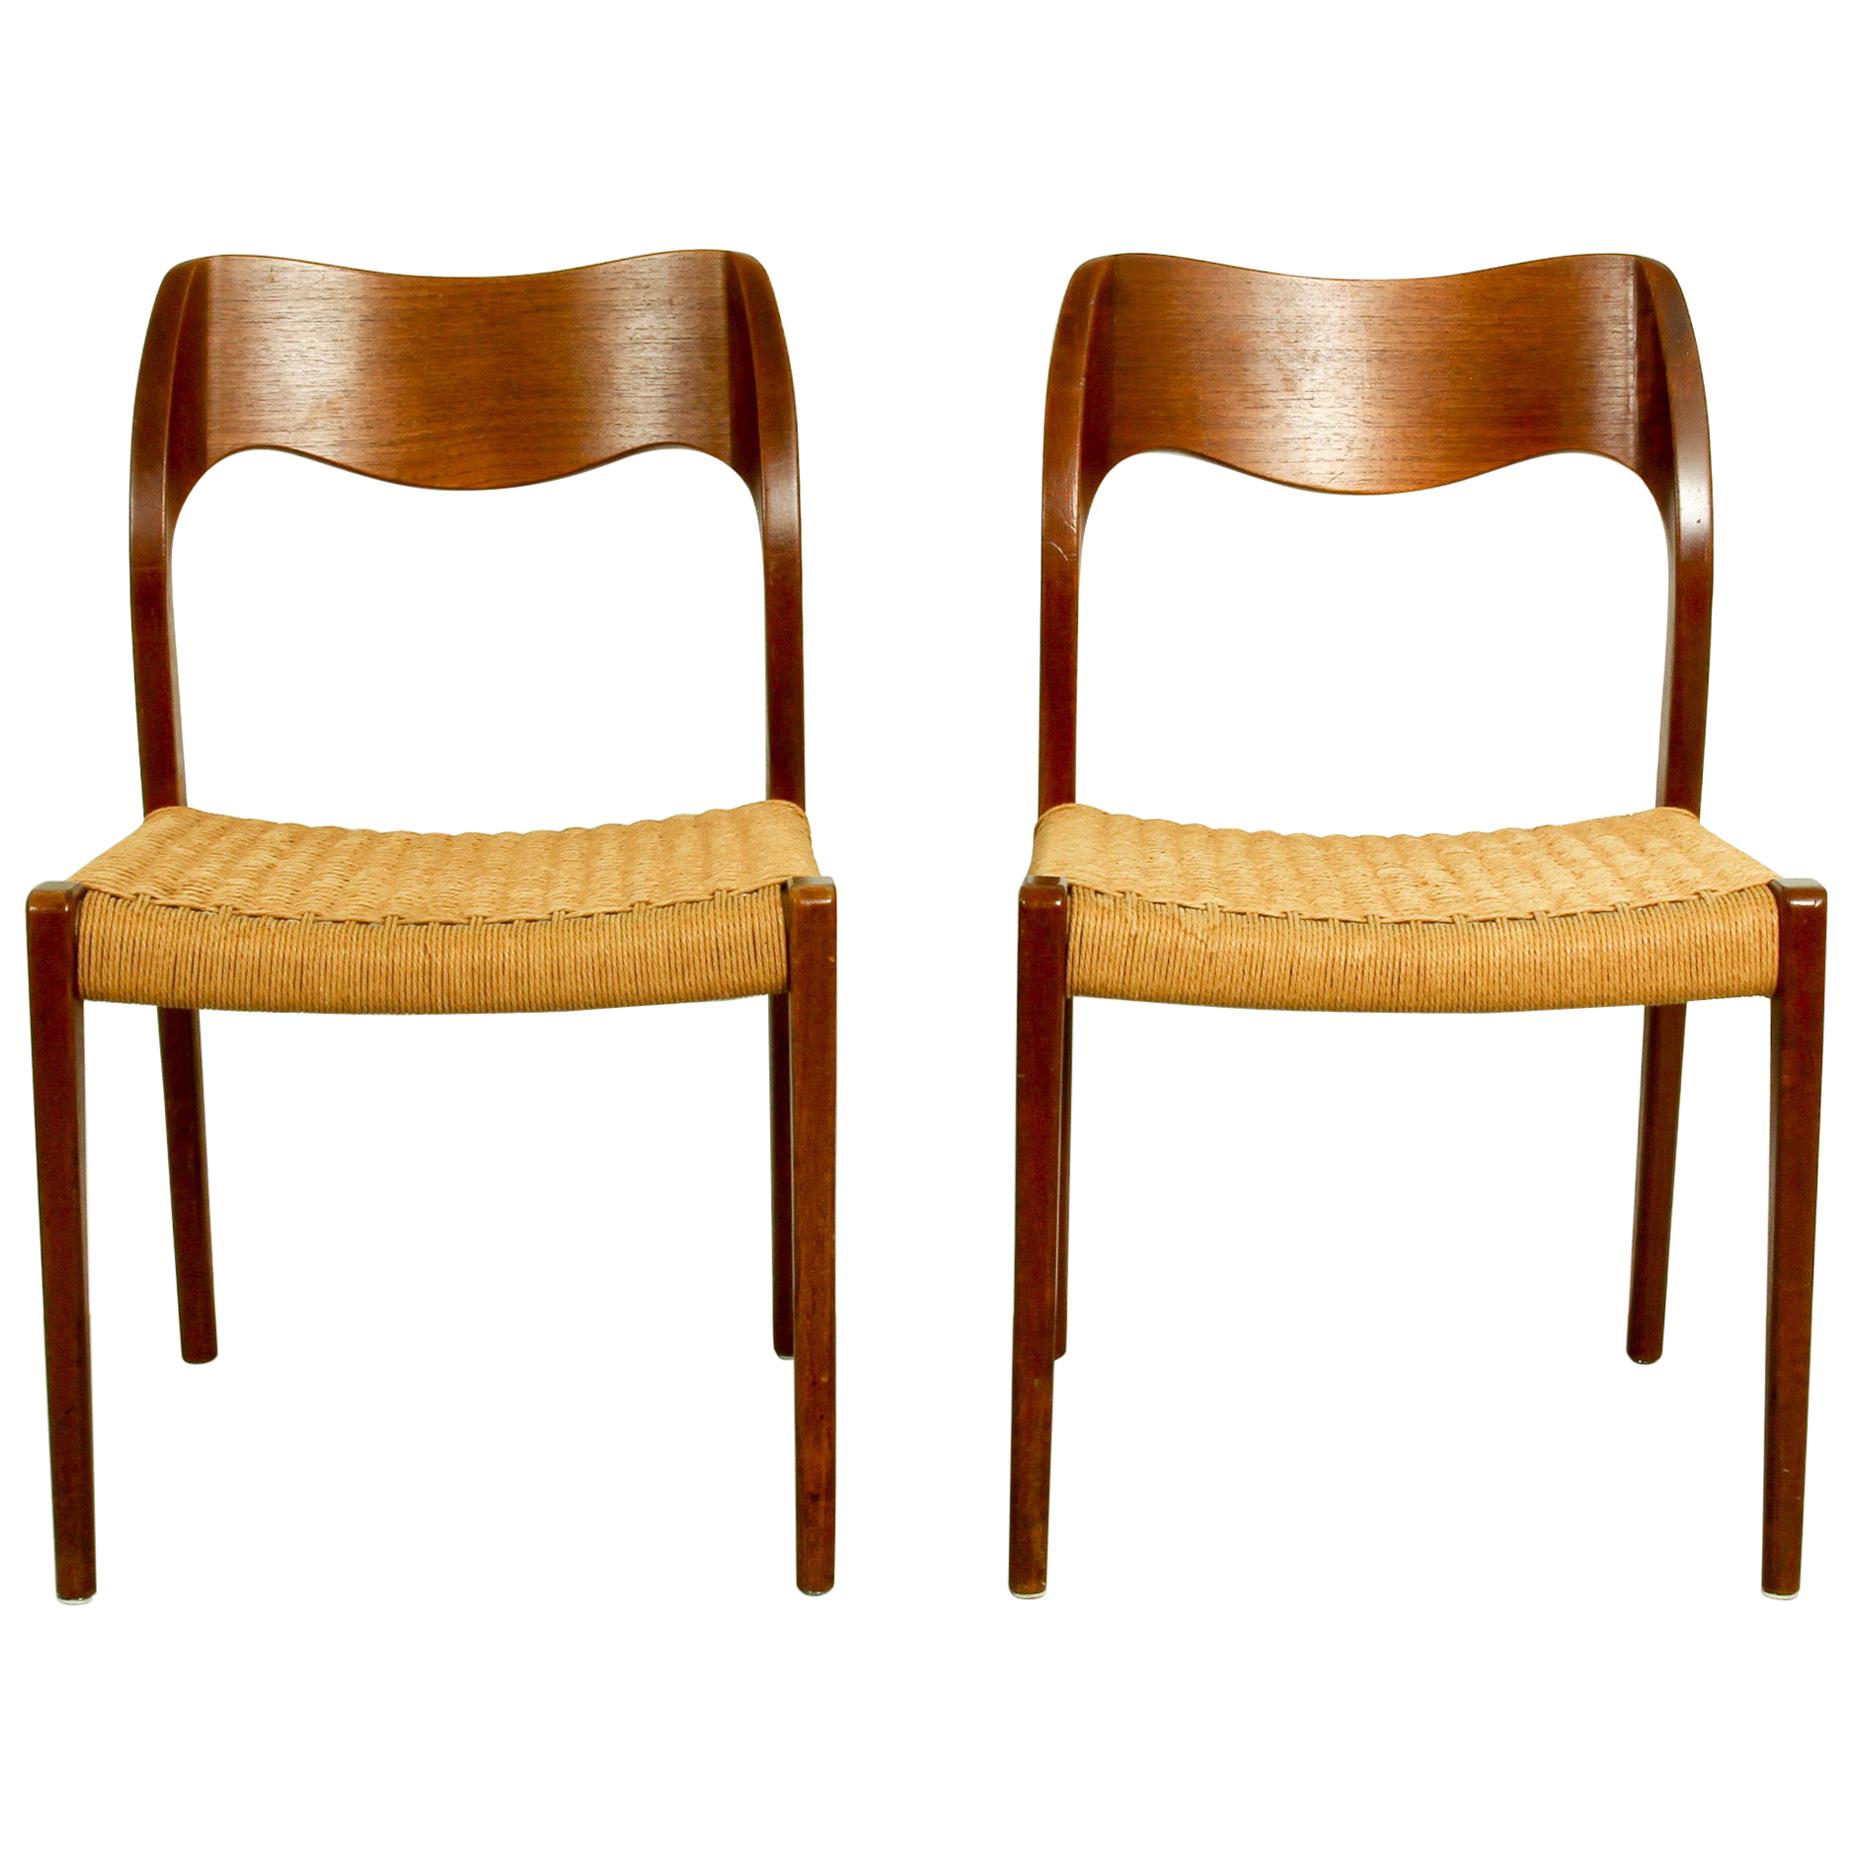 Pair of Teak Model 71 Dining Chairs by Niels Otto Møller for J.L. Møllers, 1950s